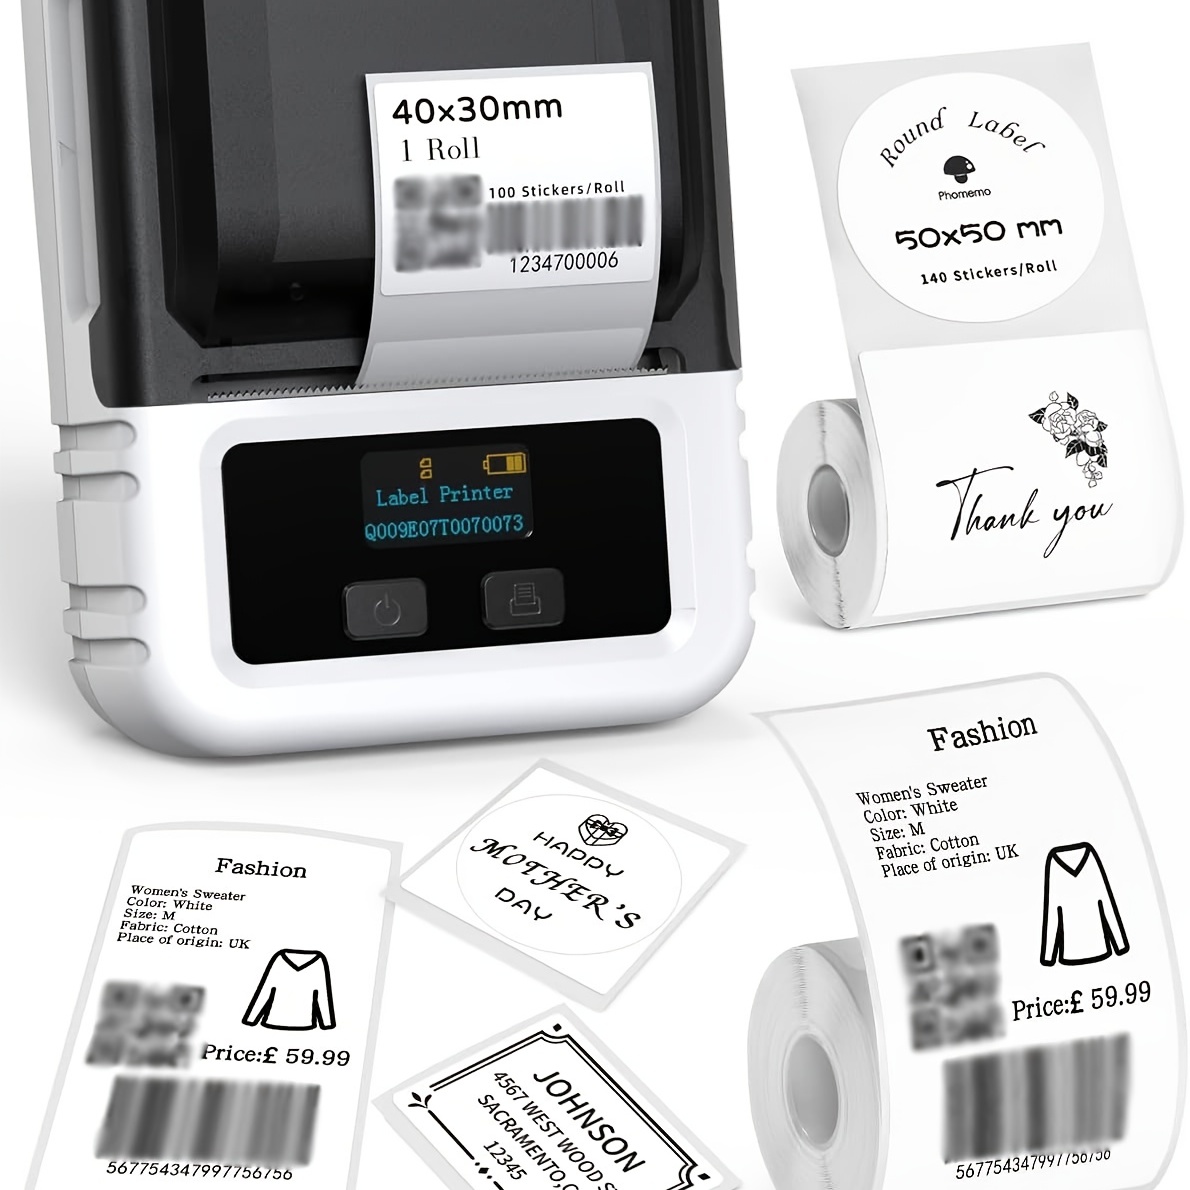 Buy Portable Printer Phomemo M02 Portable Pocket Printer- Mini